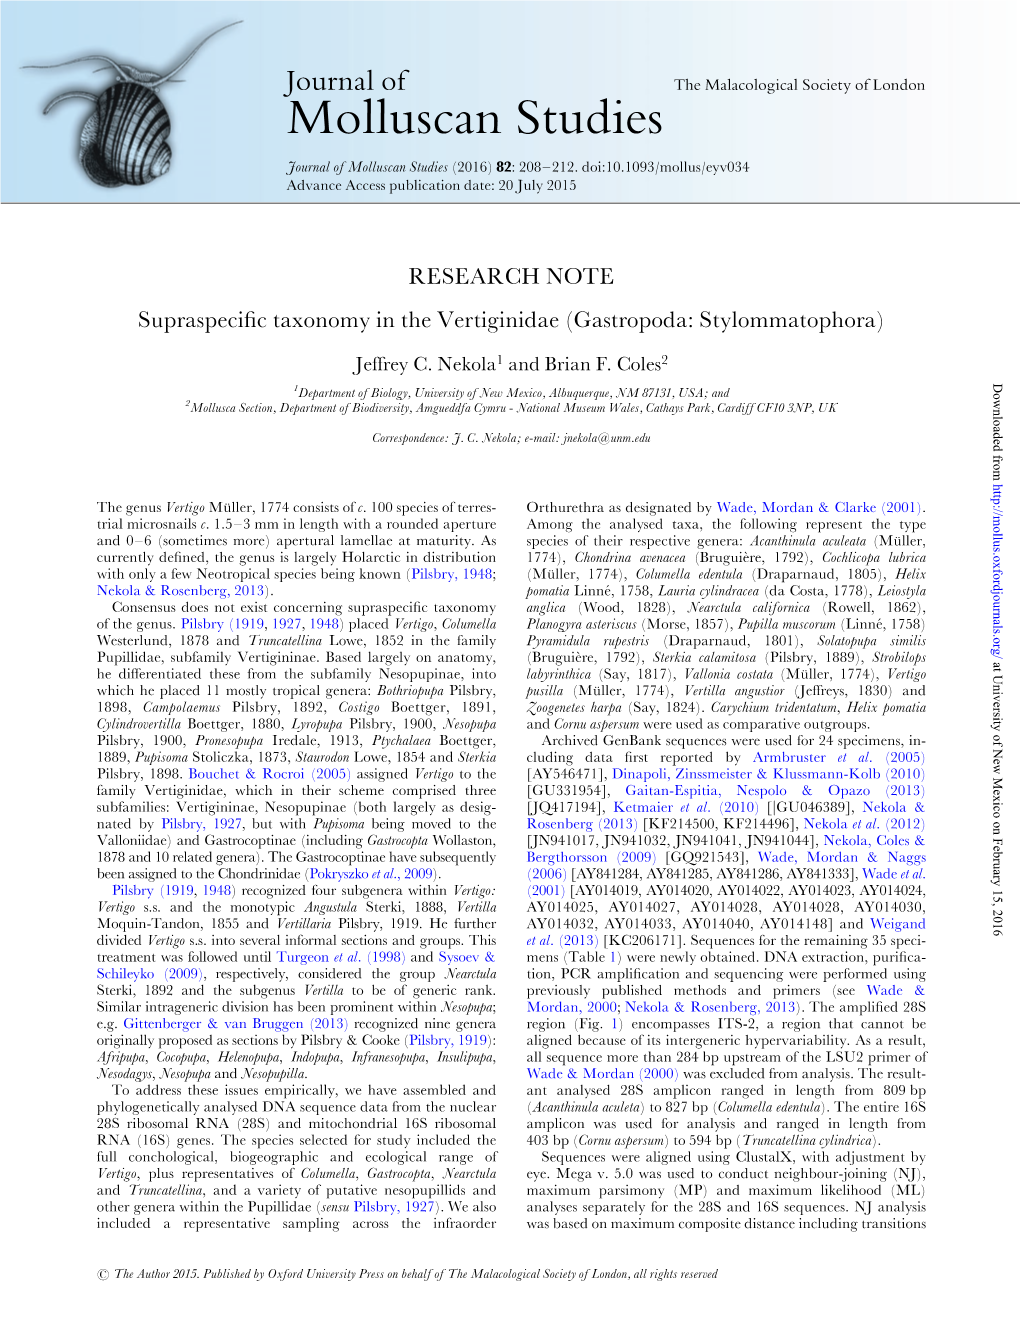 Supraspecific Taxonomy in the Vertiginidae